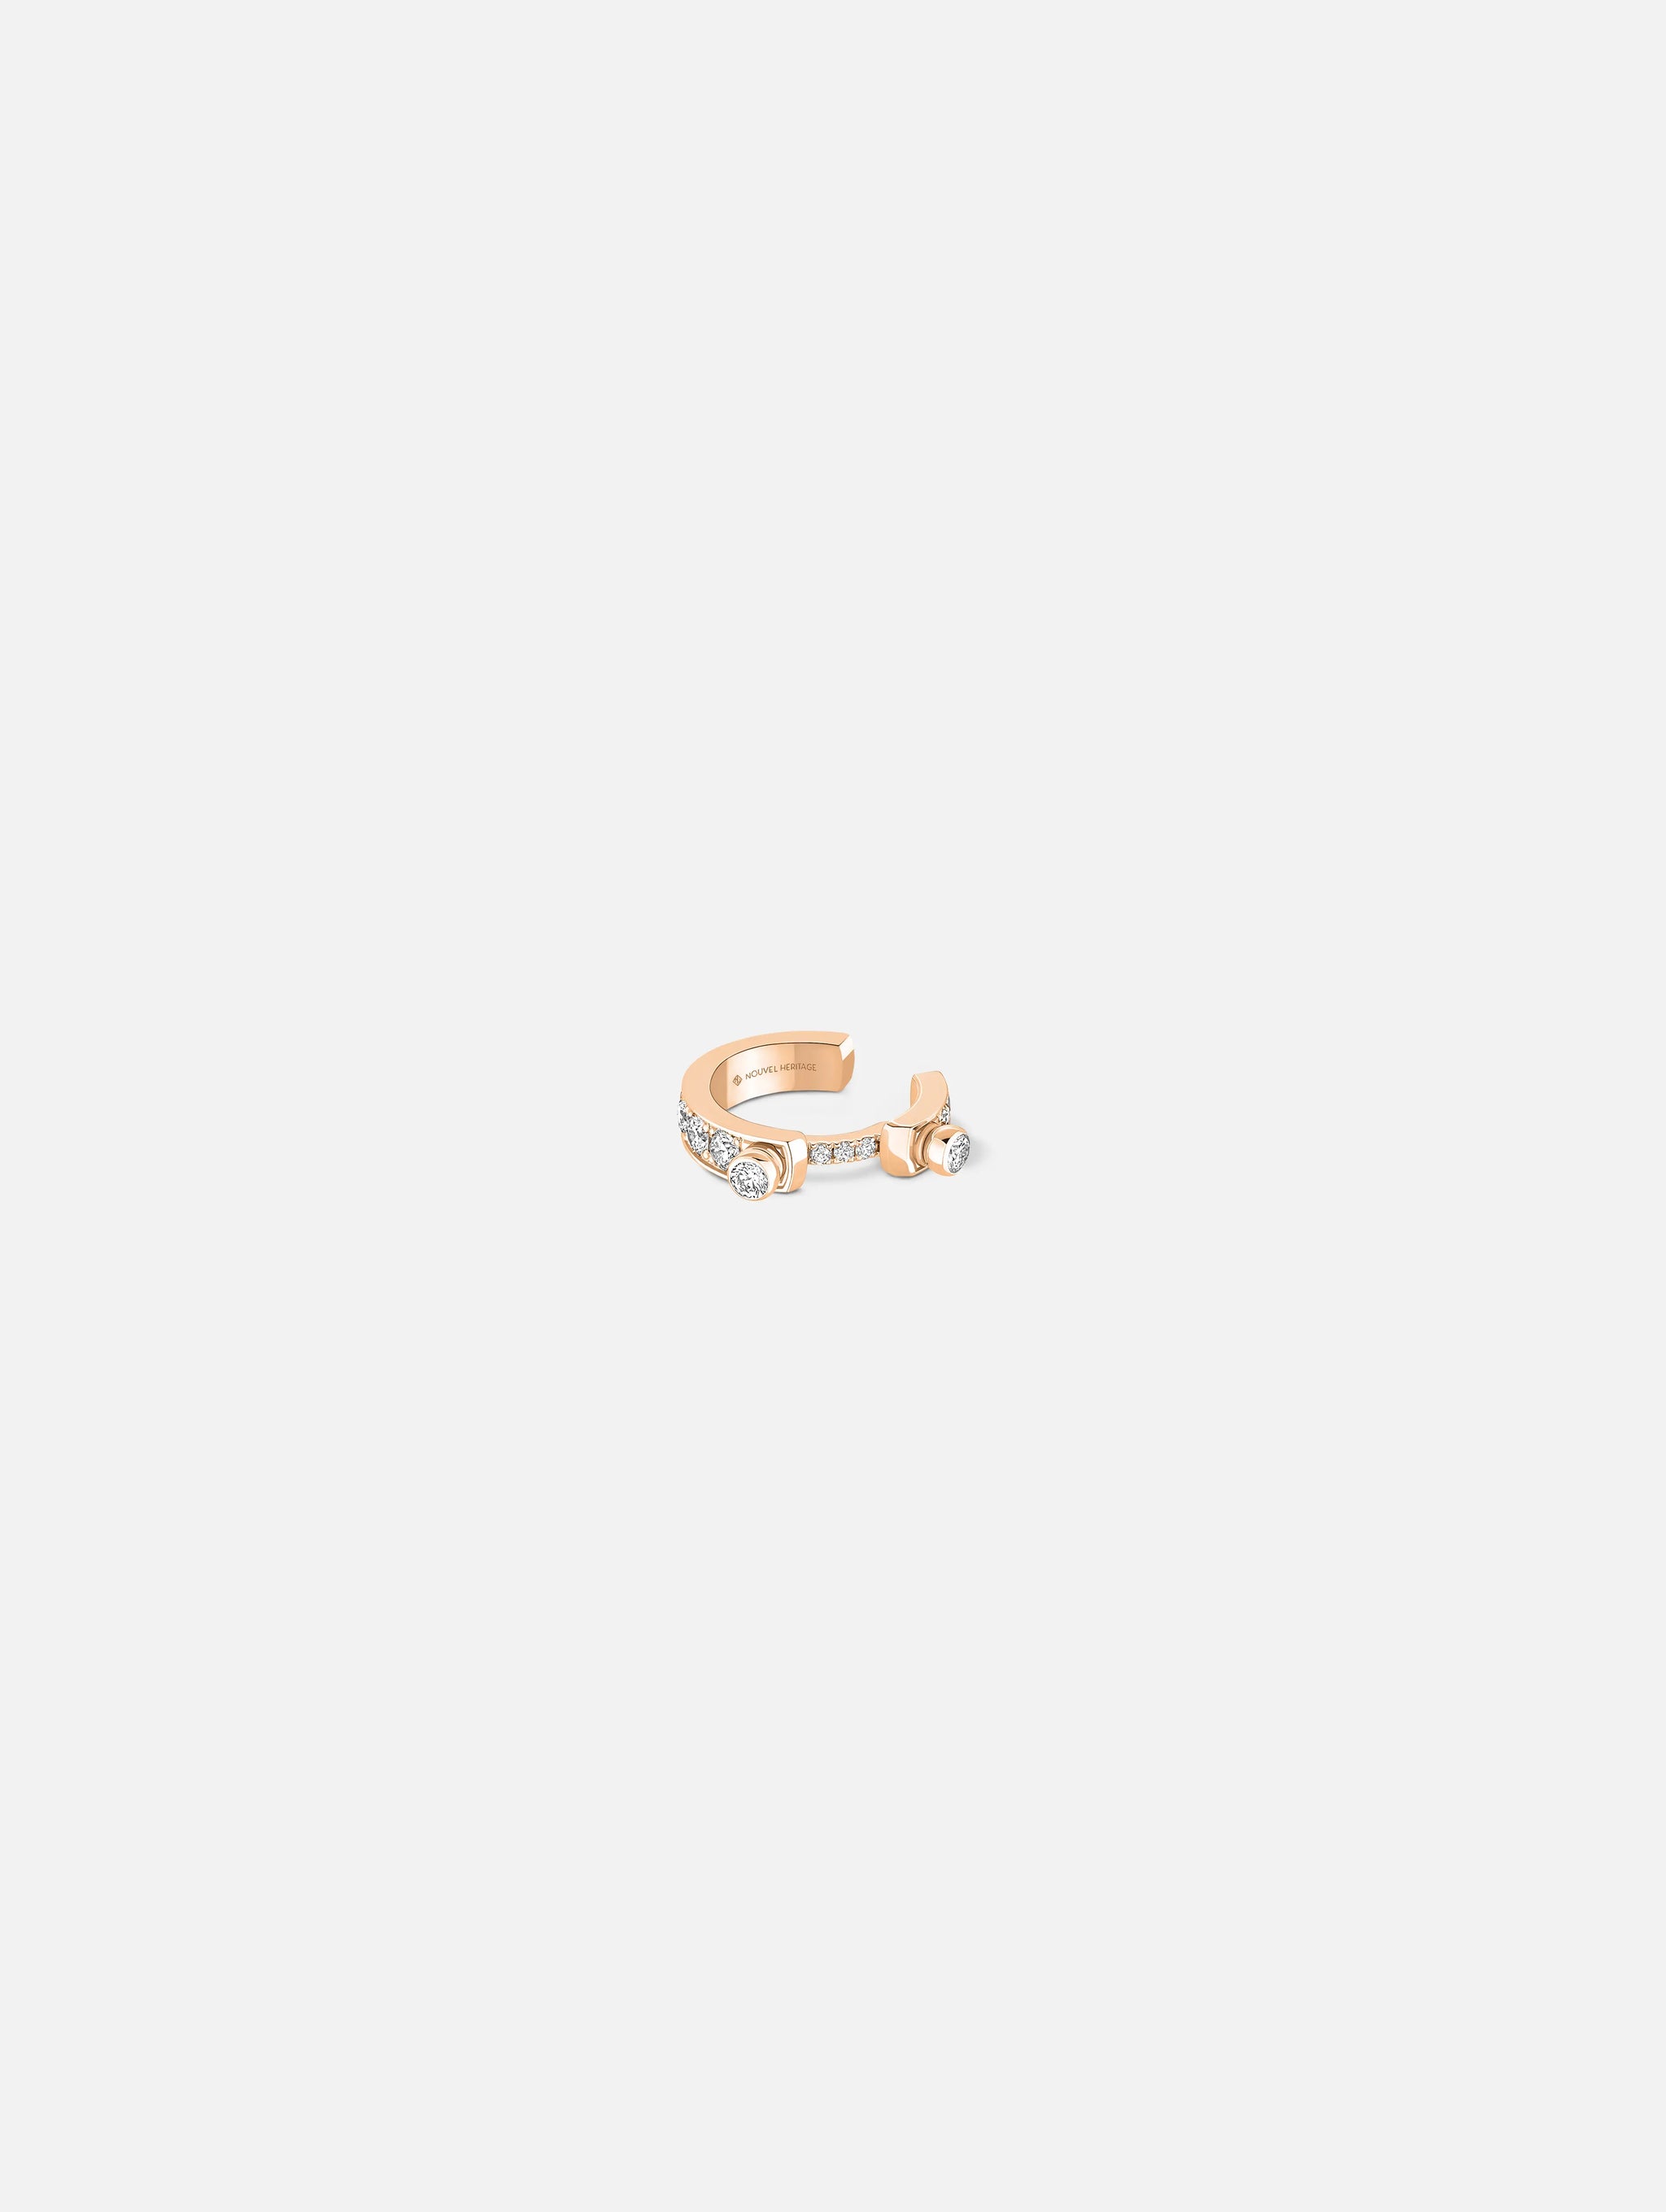 Eternity Tuxedo Ear Cuff in Rose Gold - 1 - Nouvel Heritage